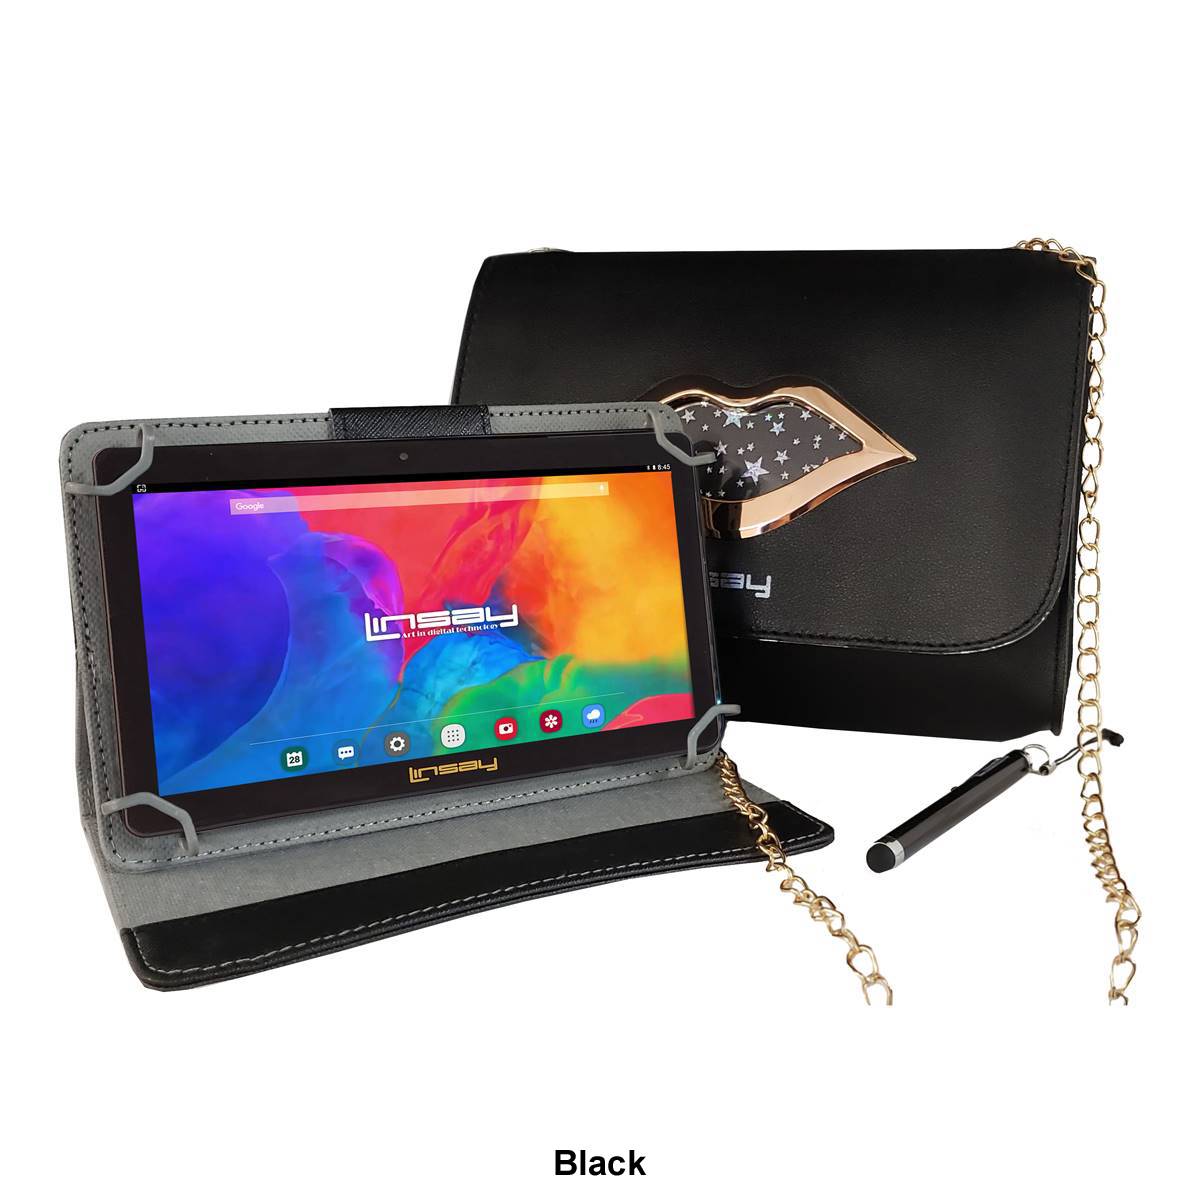 Linsay 7in. Quad Core Tablet With Fashion Kiss Handbag